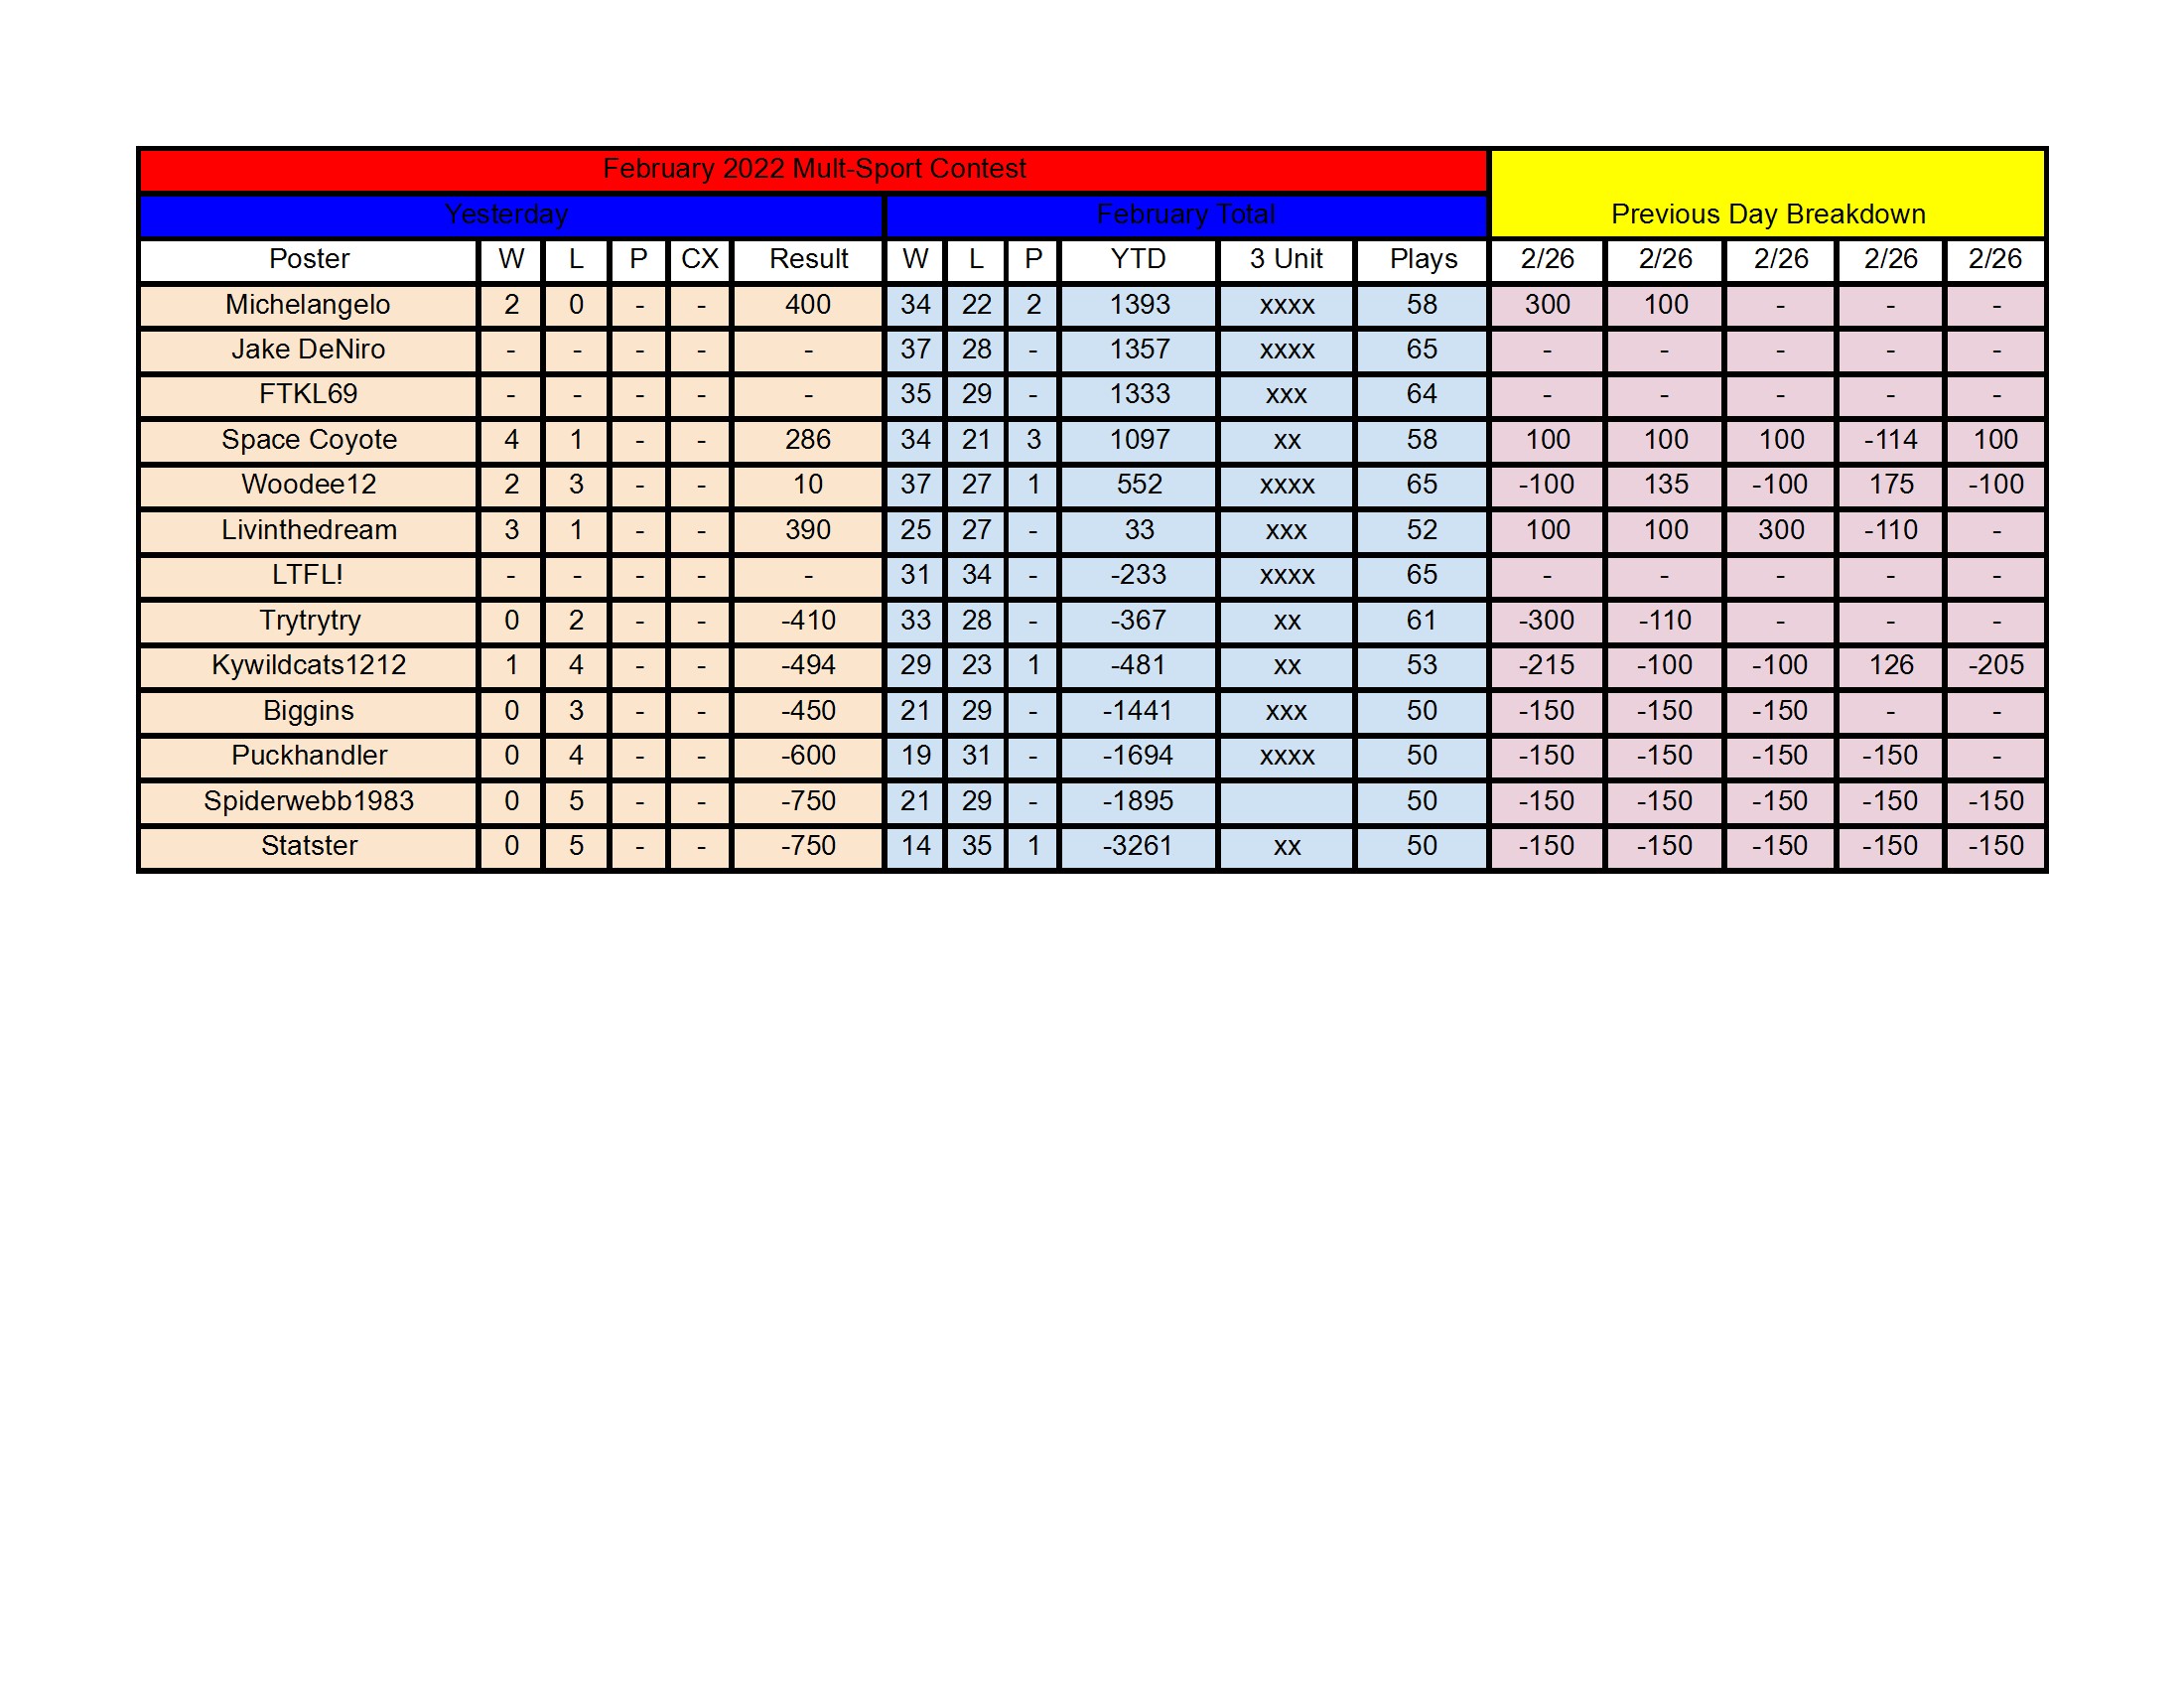 February Standings - 2_26 conv 1.jpeg